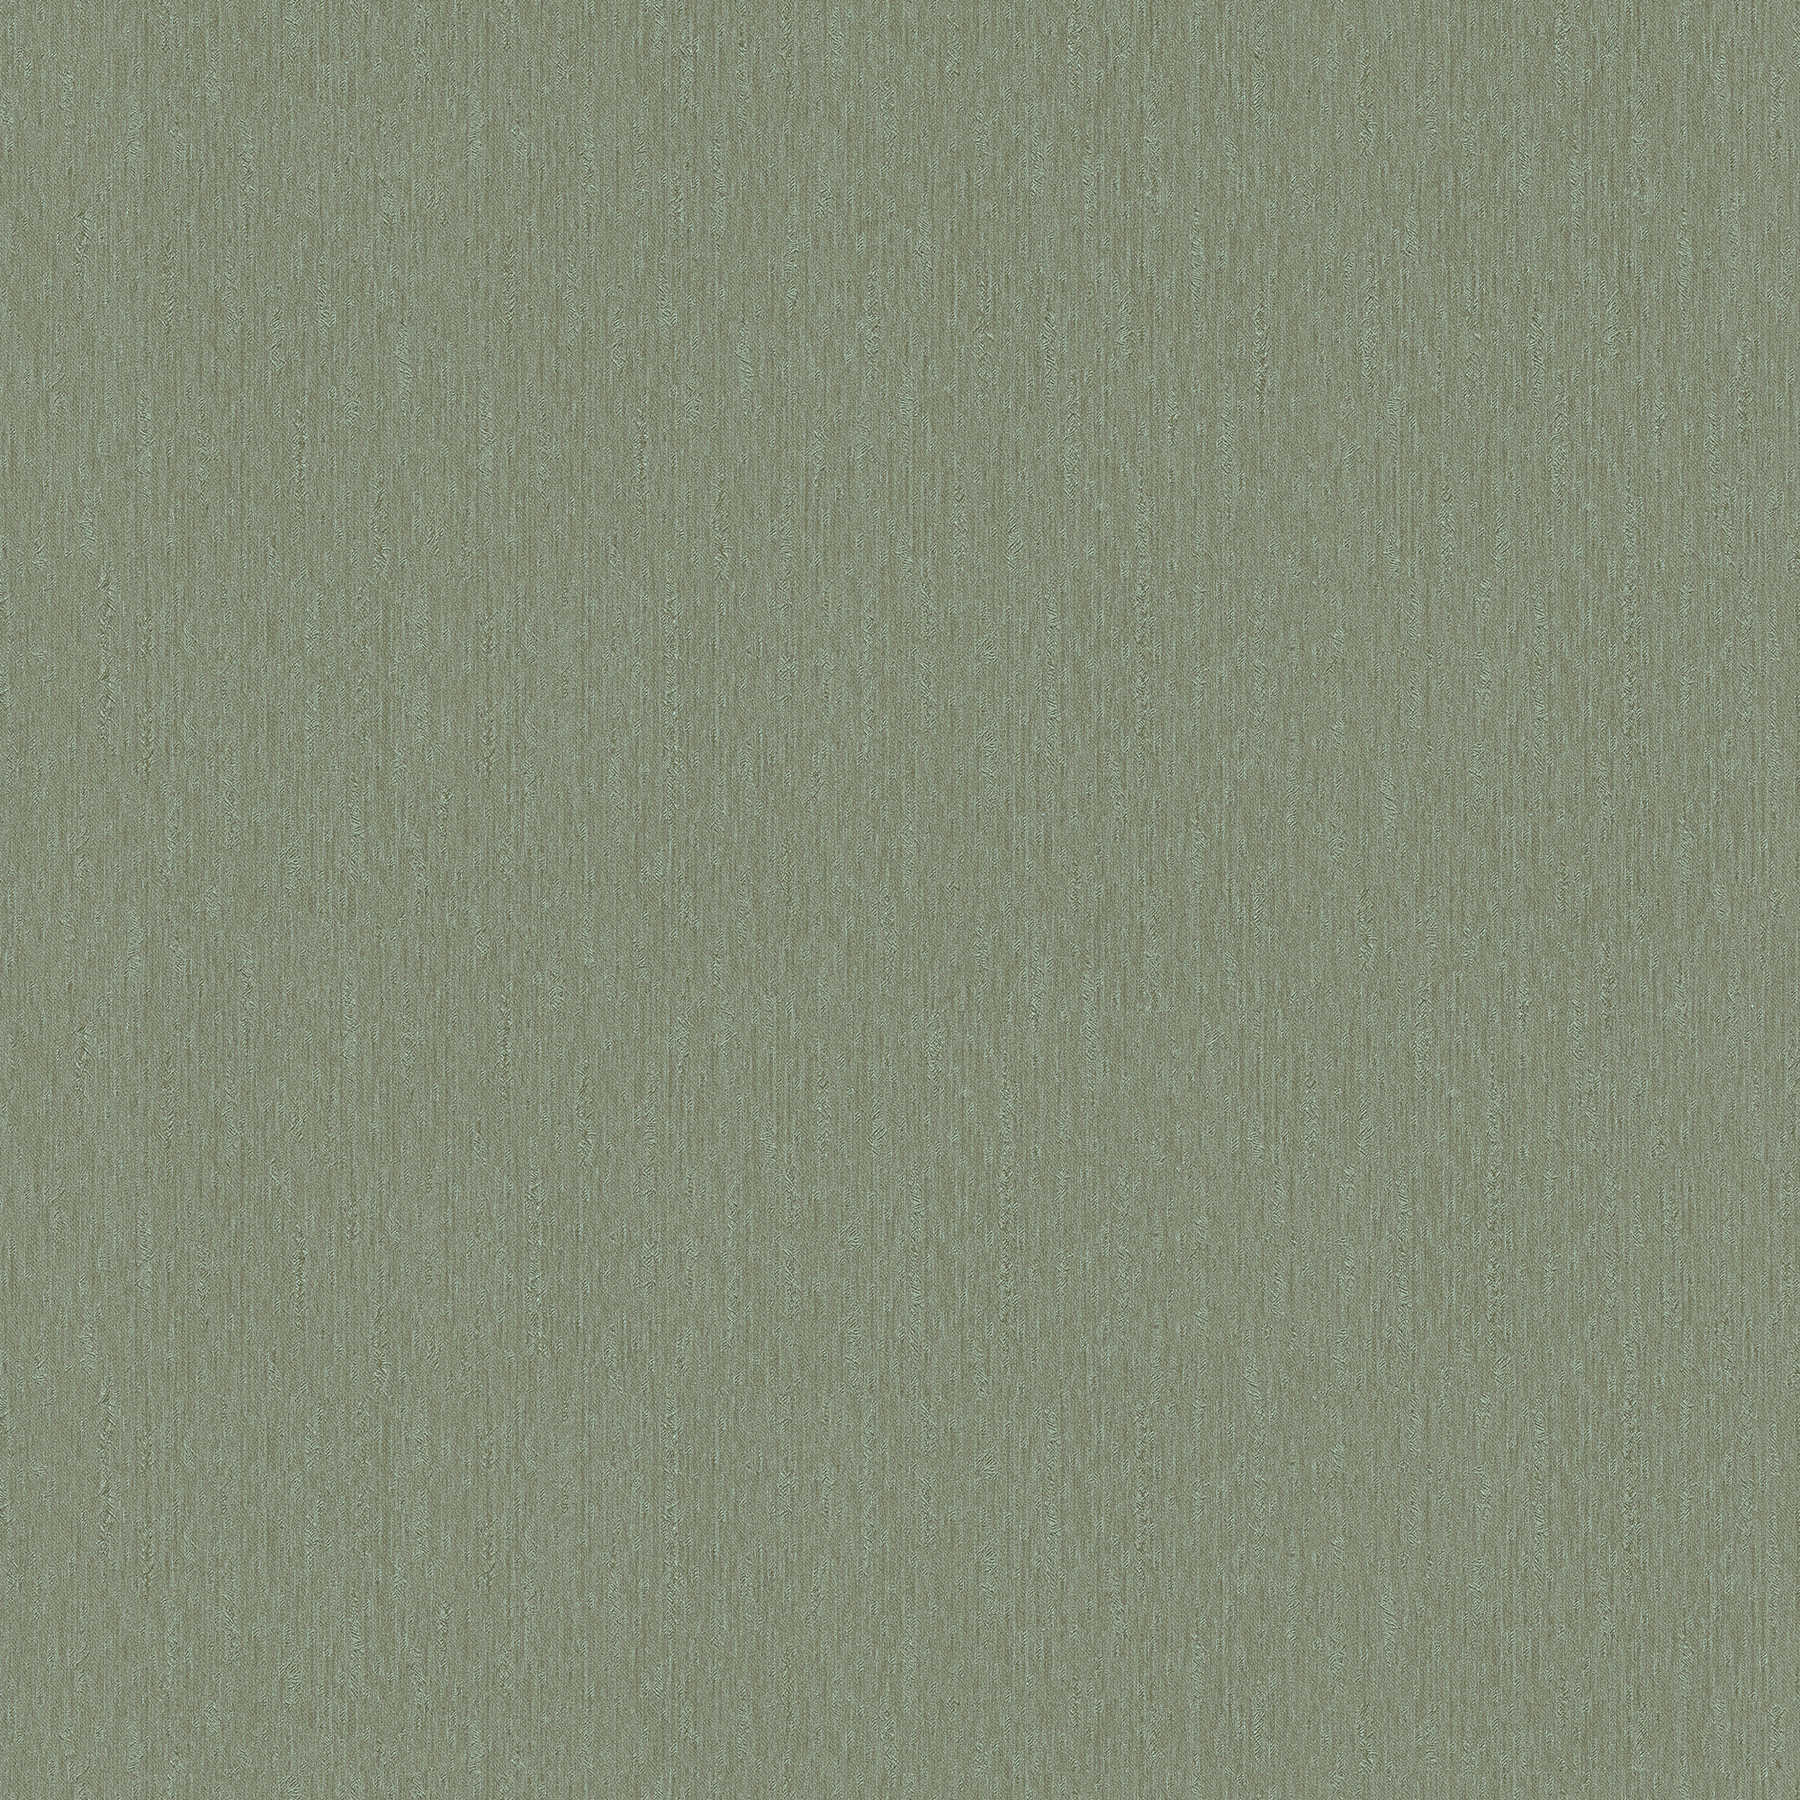             Olivgrüne Tapete mit Textilstruktur – Grün, Metallic
        